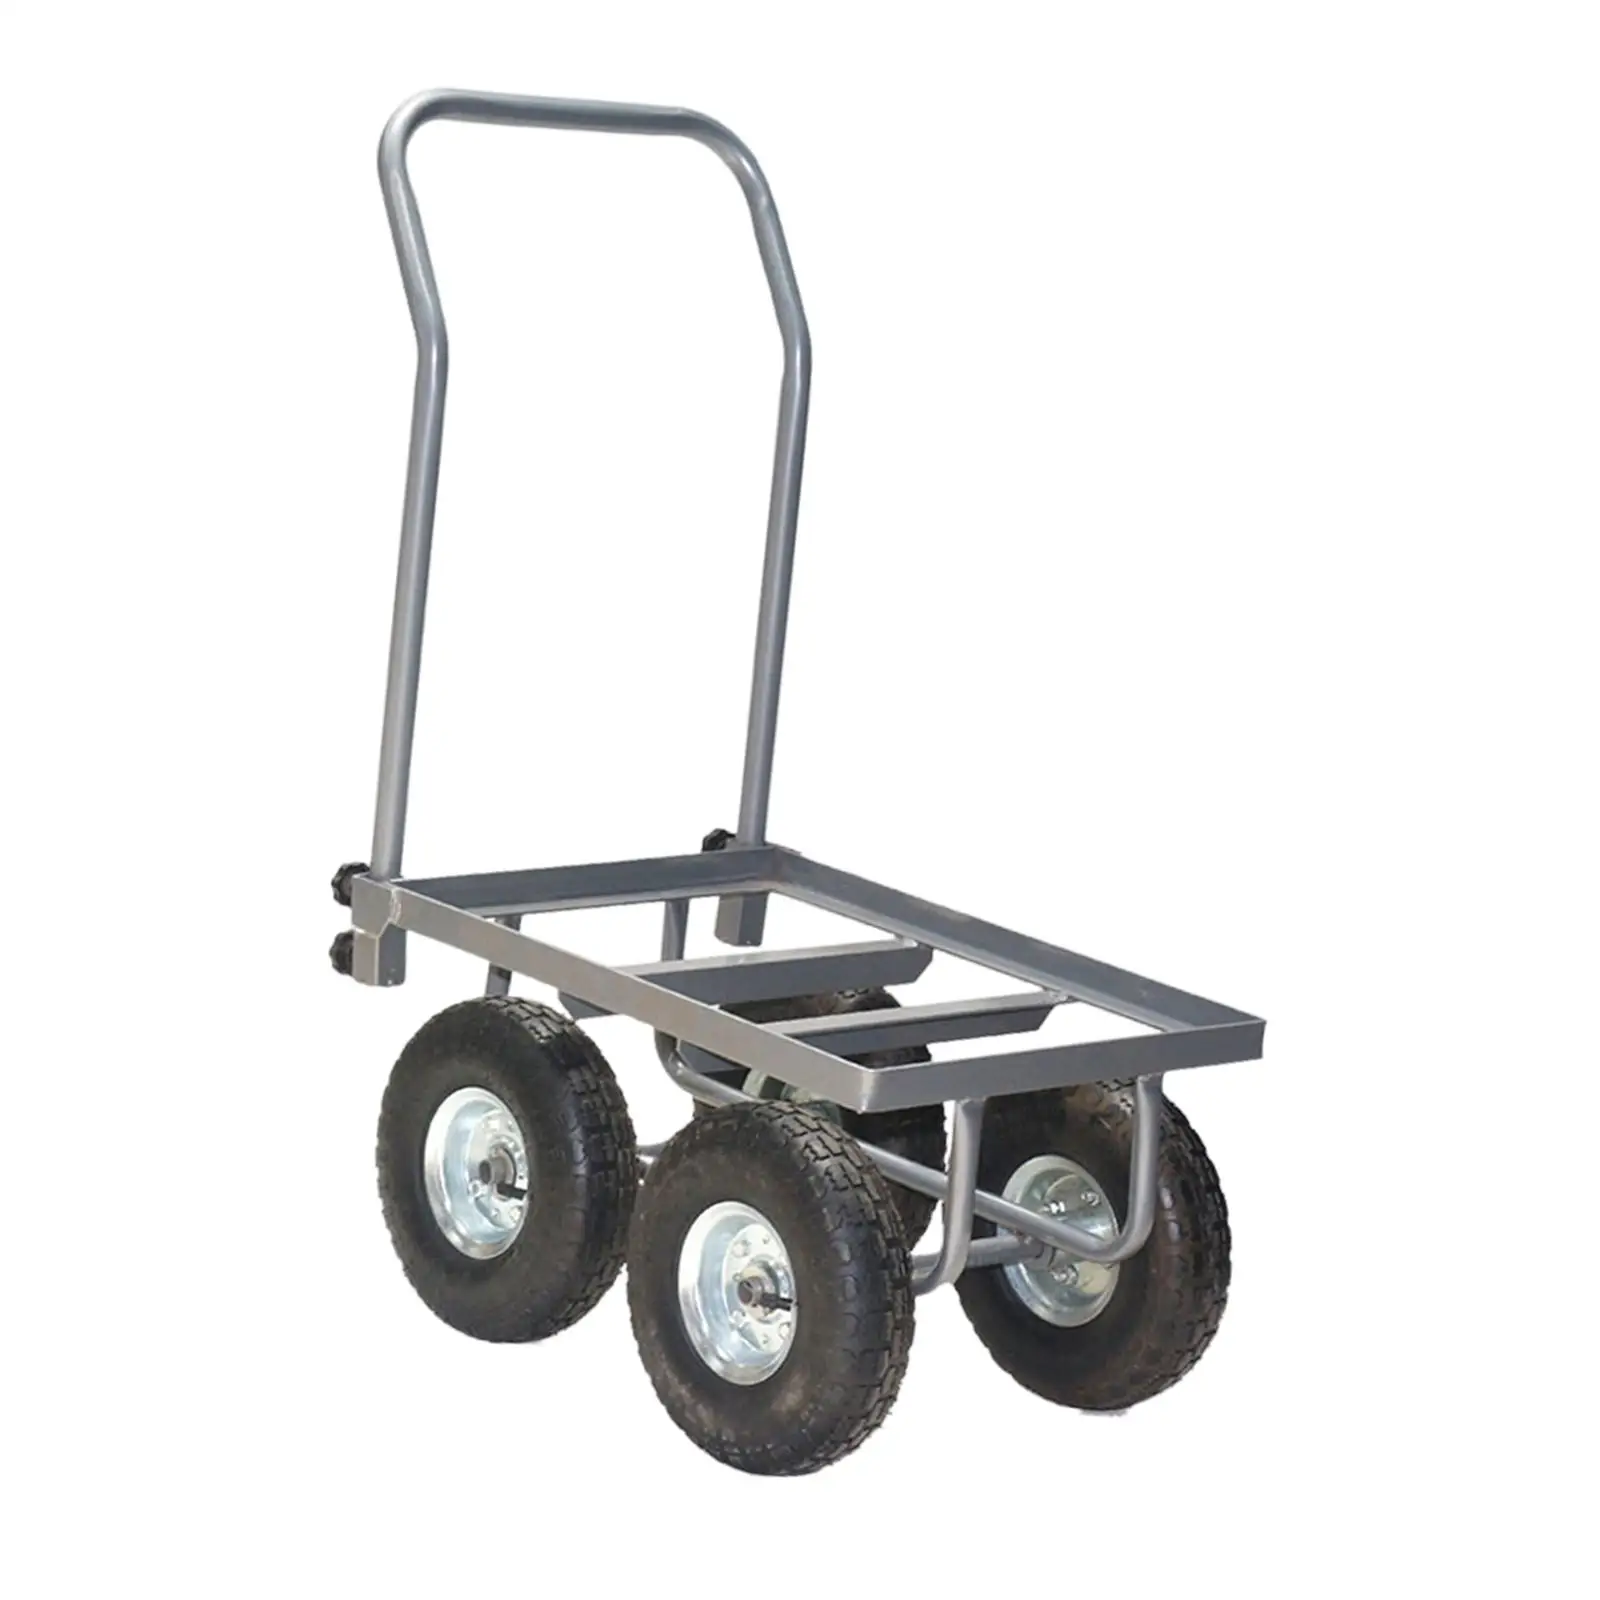 Folding Platform Truck with 4 Wheel Heavy Duty Platform Trolley Hand Push Cart for Garden Office Transport Moving Drinks Crates